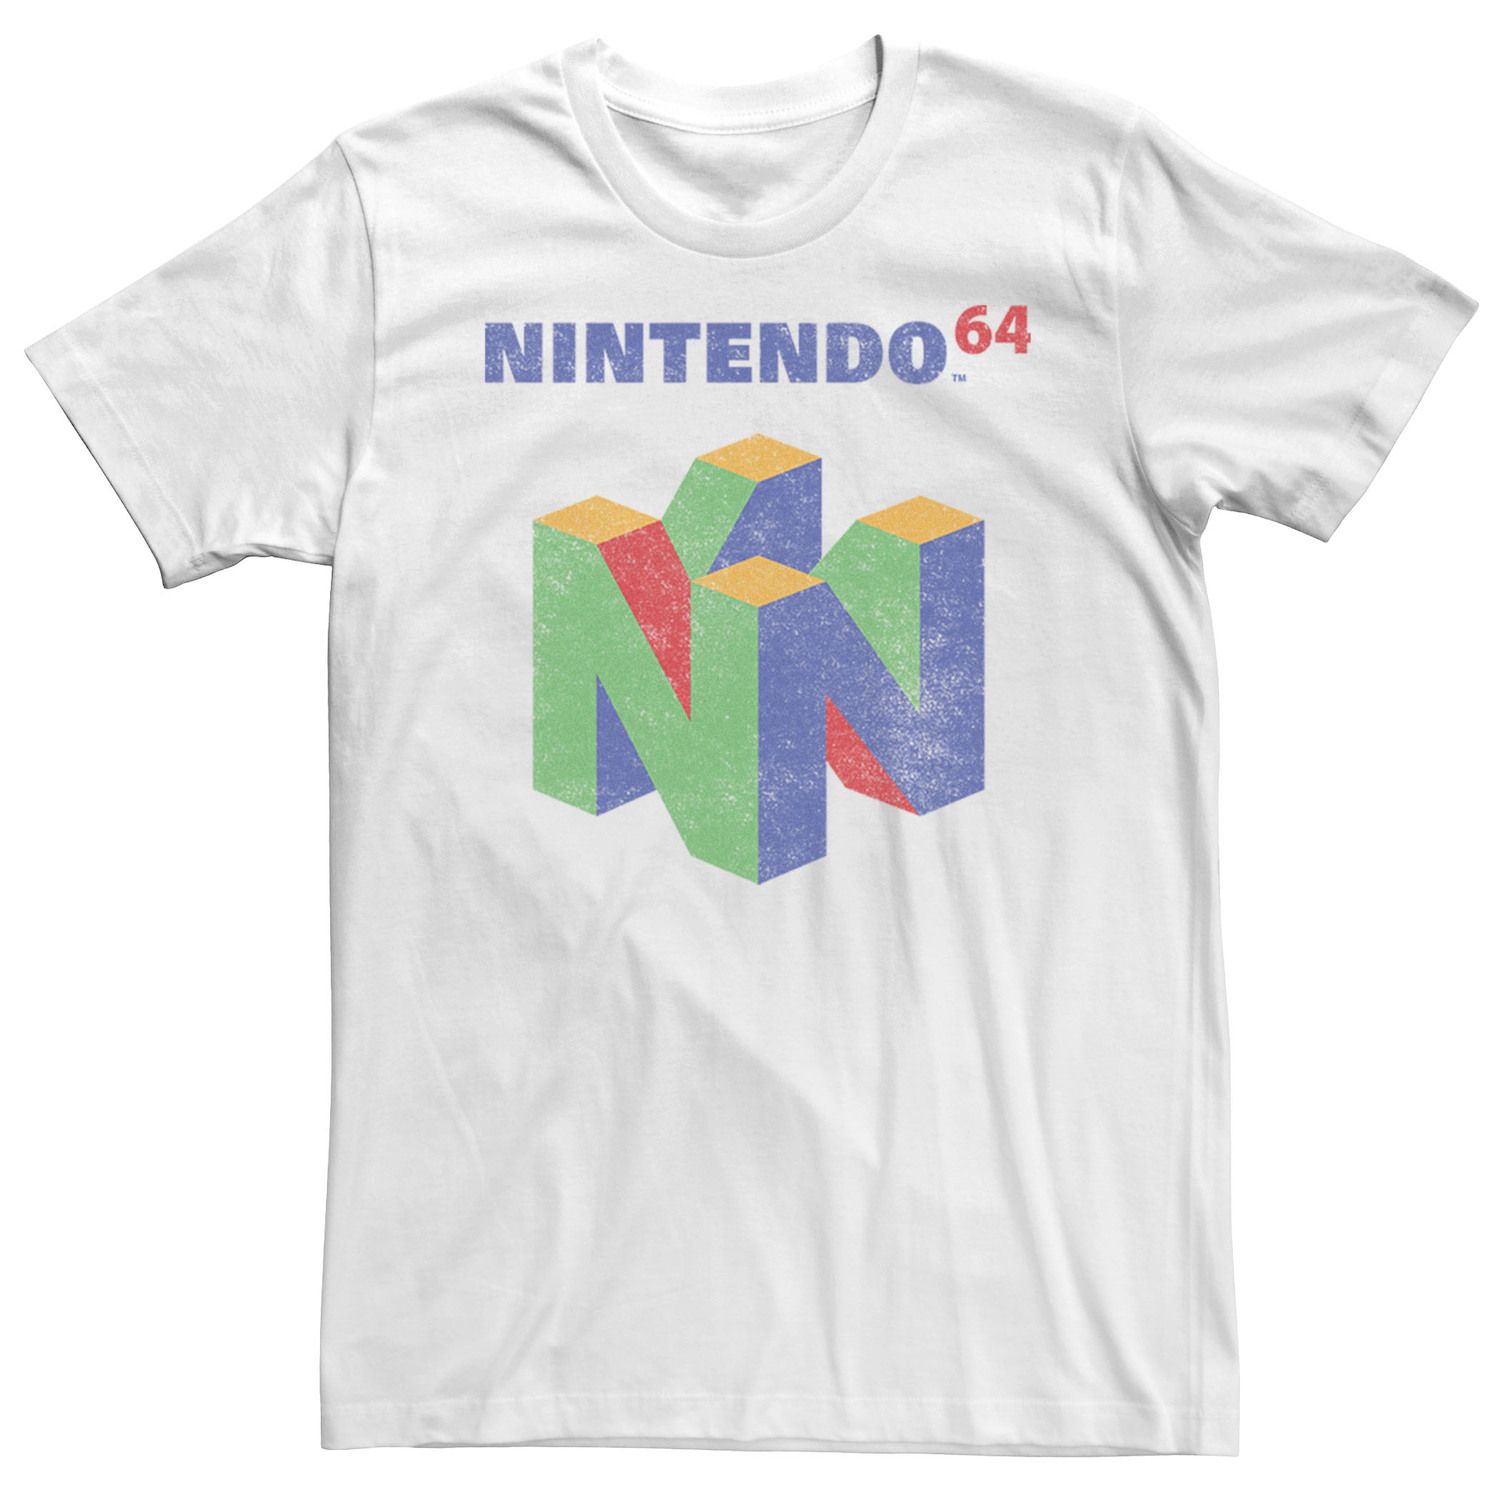 Мужская красочная футболка с логотипом Nintendo 64 Licensed Character